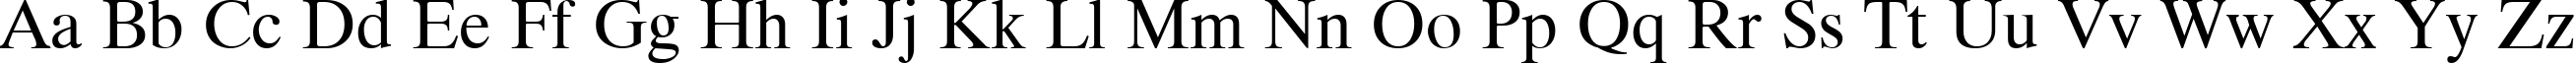 Пример написания английского алфавита шрифтом Tracia